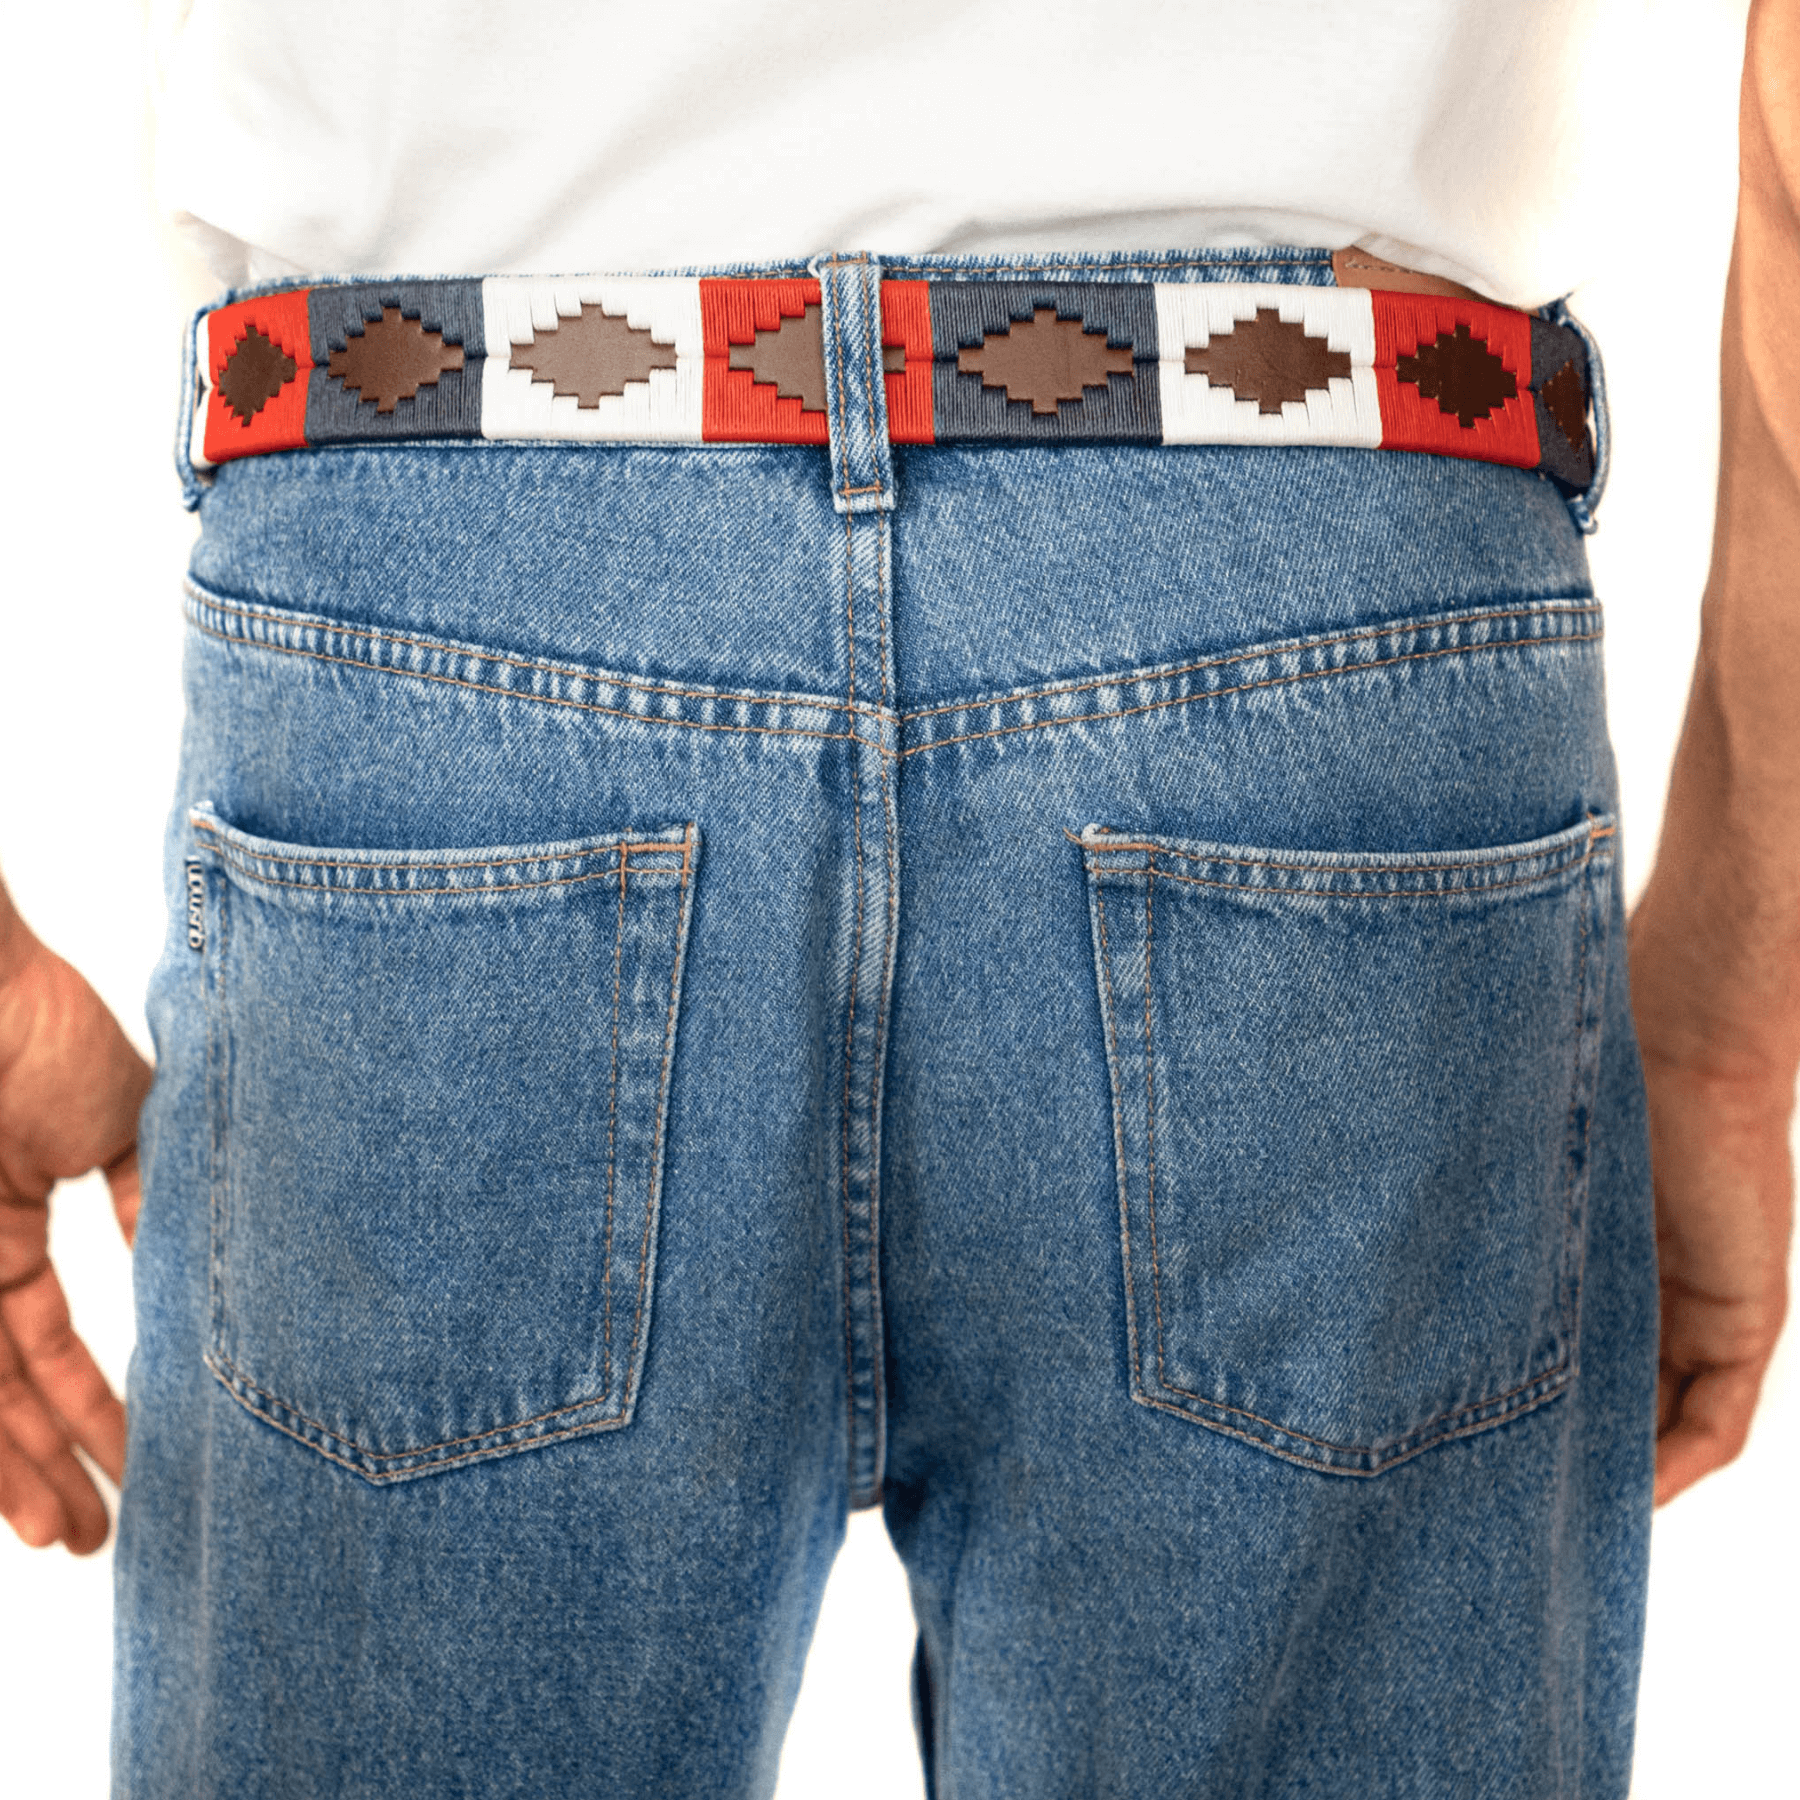 Gaucholife Belts Embroidered Belt (Red/White/Blue)